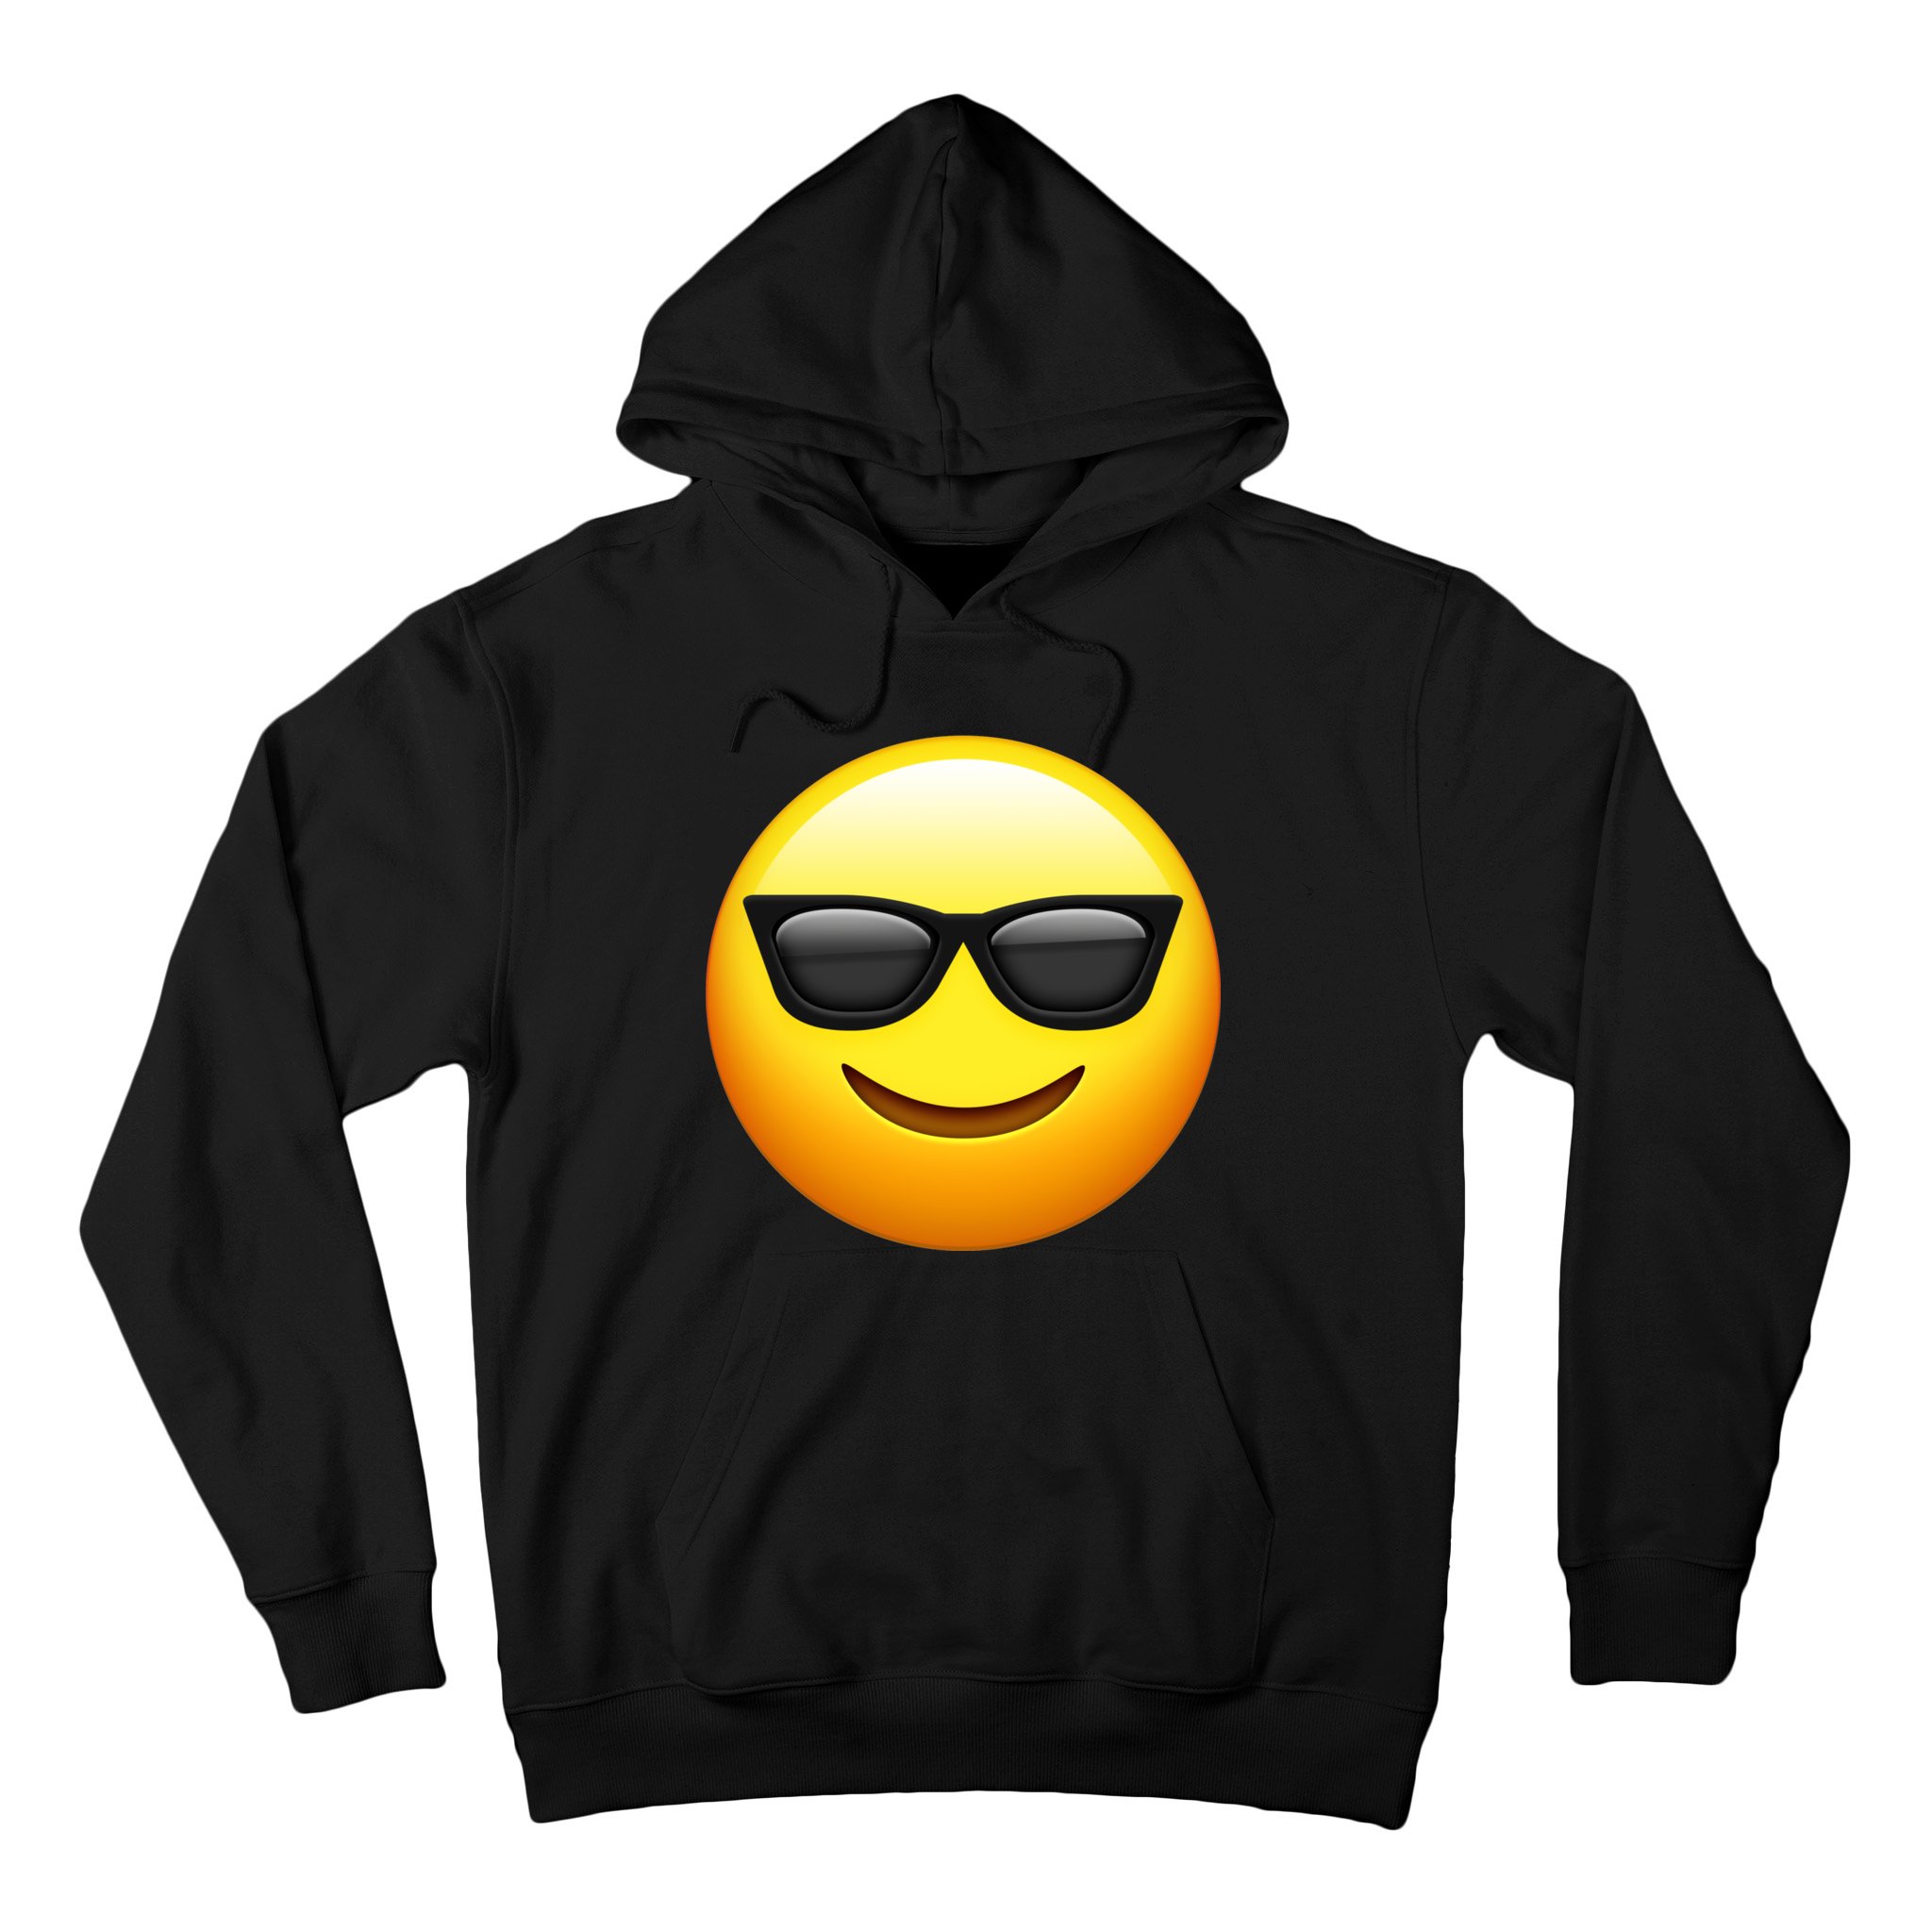 Emoticon Sunglasses Smile Face Tie-Dye Adult Hoodie Sweatshirt